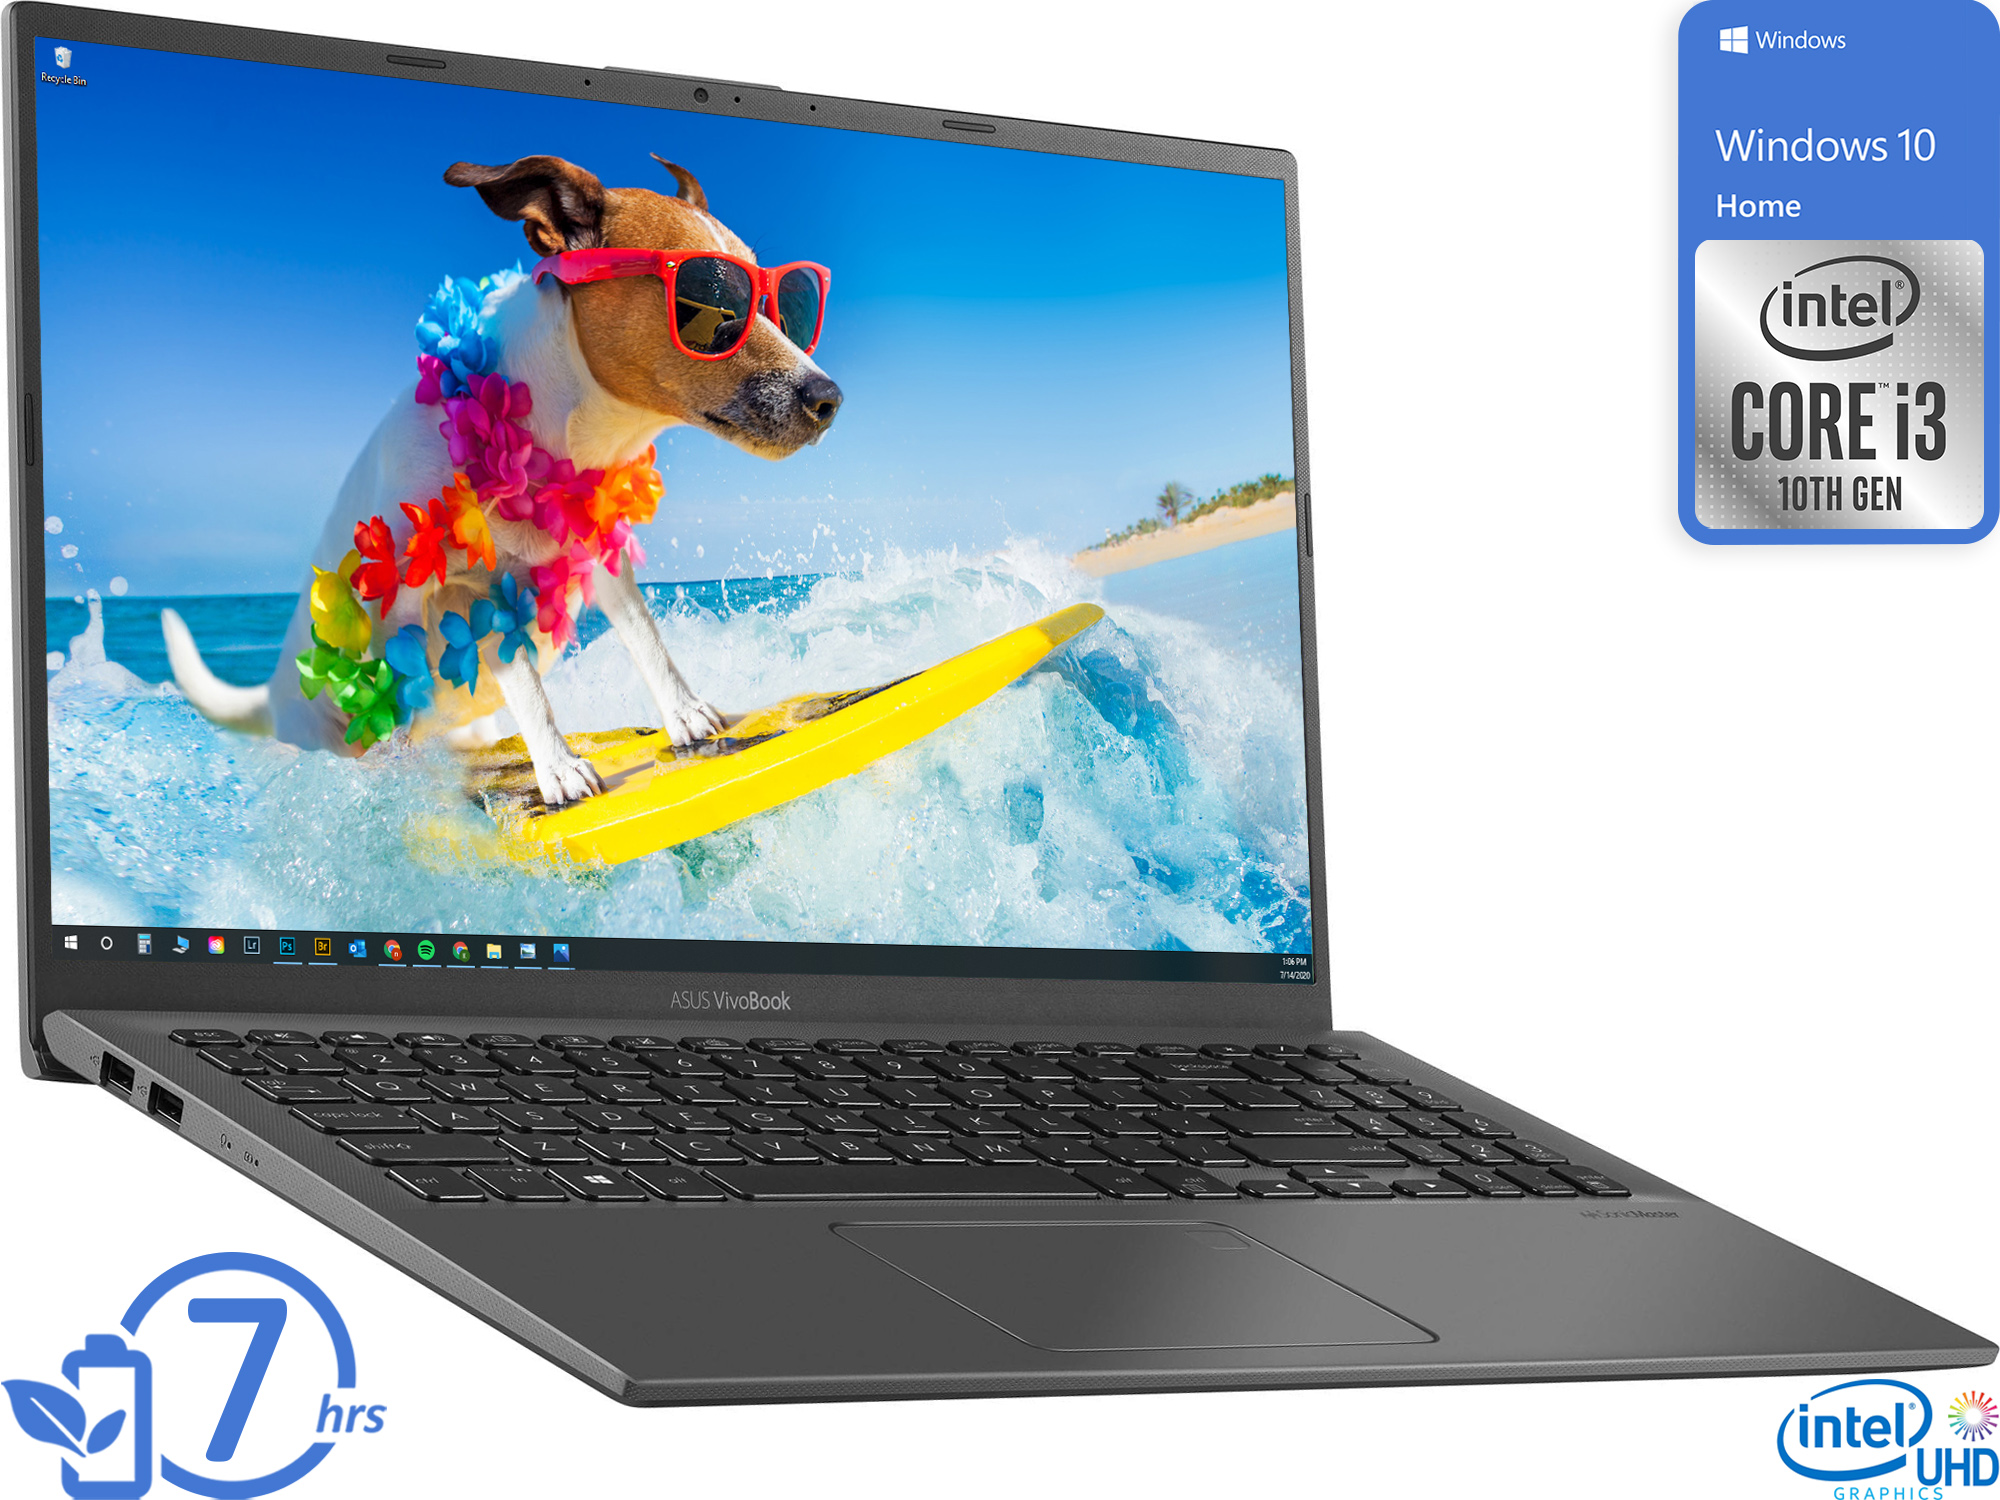 2021 Flagship ASUS VivoBook 15 Thin and Light Laptop I 15.6" FHD Touchscreen Display I 10th Gen Intel Core i3-1005G1 I 4GB RAM 128GB SSD Fingerprint Wifi5 Win 10 - image 2 of 7